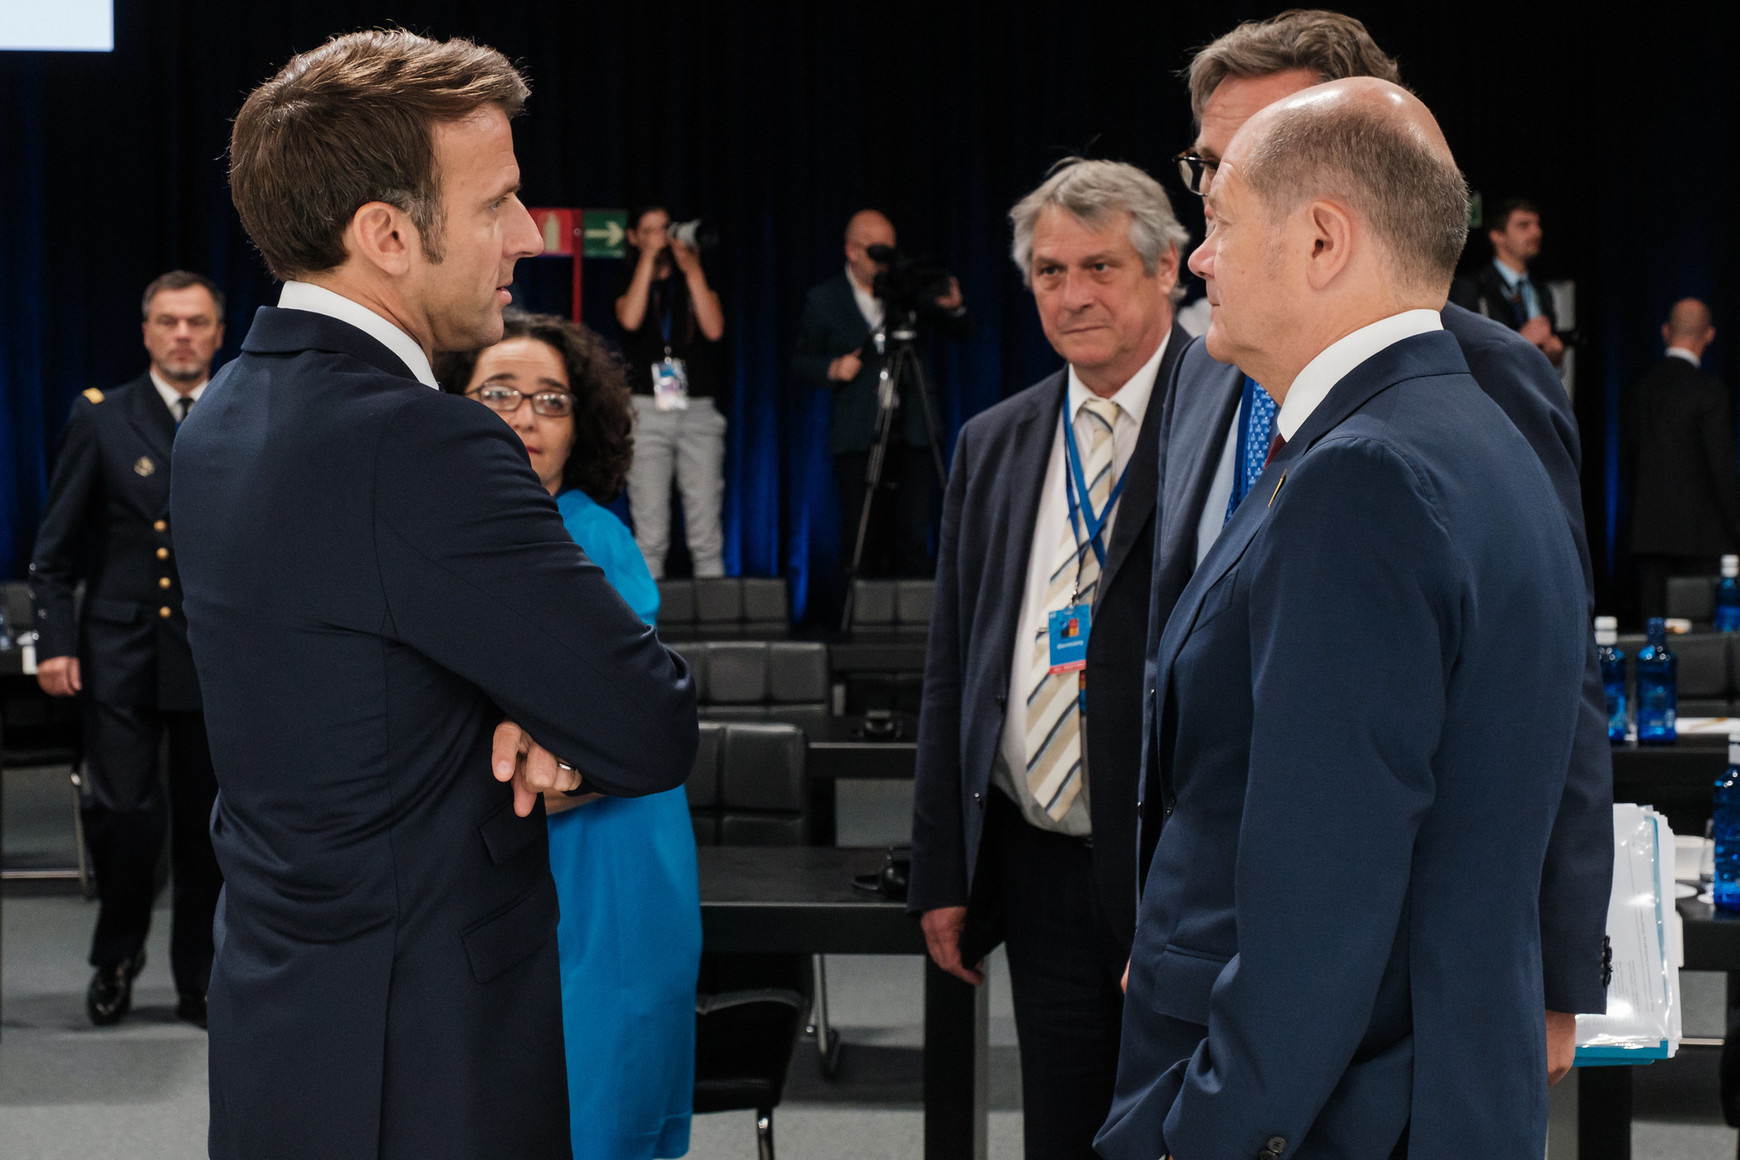 @NAC 30 JUN  Emmanuel Macron (President of France) and Olaf Scholz (Chancellor of Germany) / Flickr Un « rééquilibrage » des relations commerciales avec la Chine